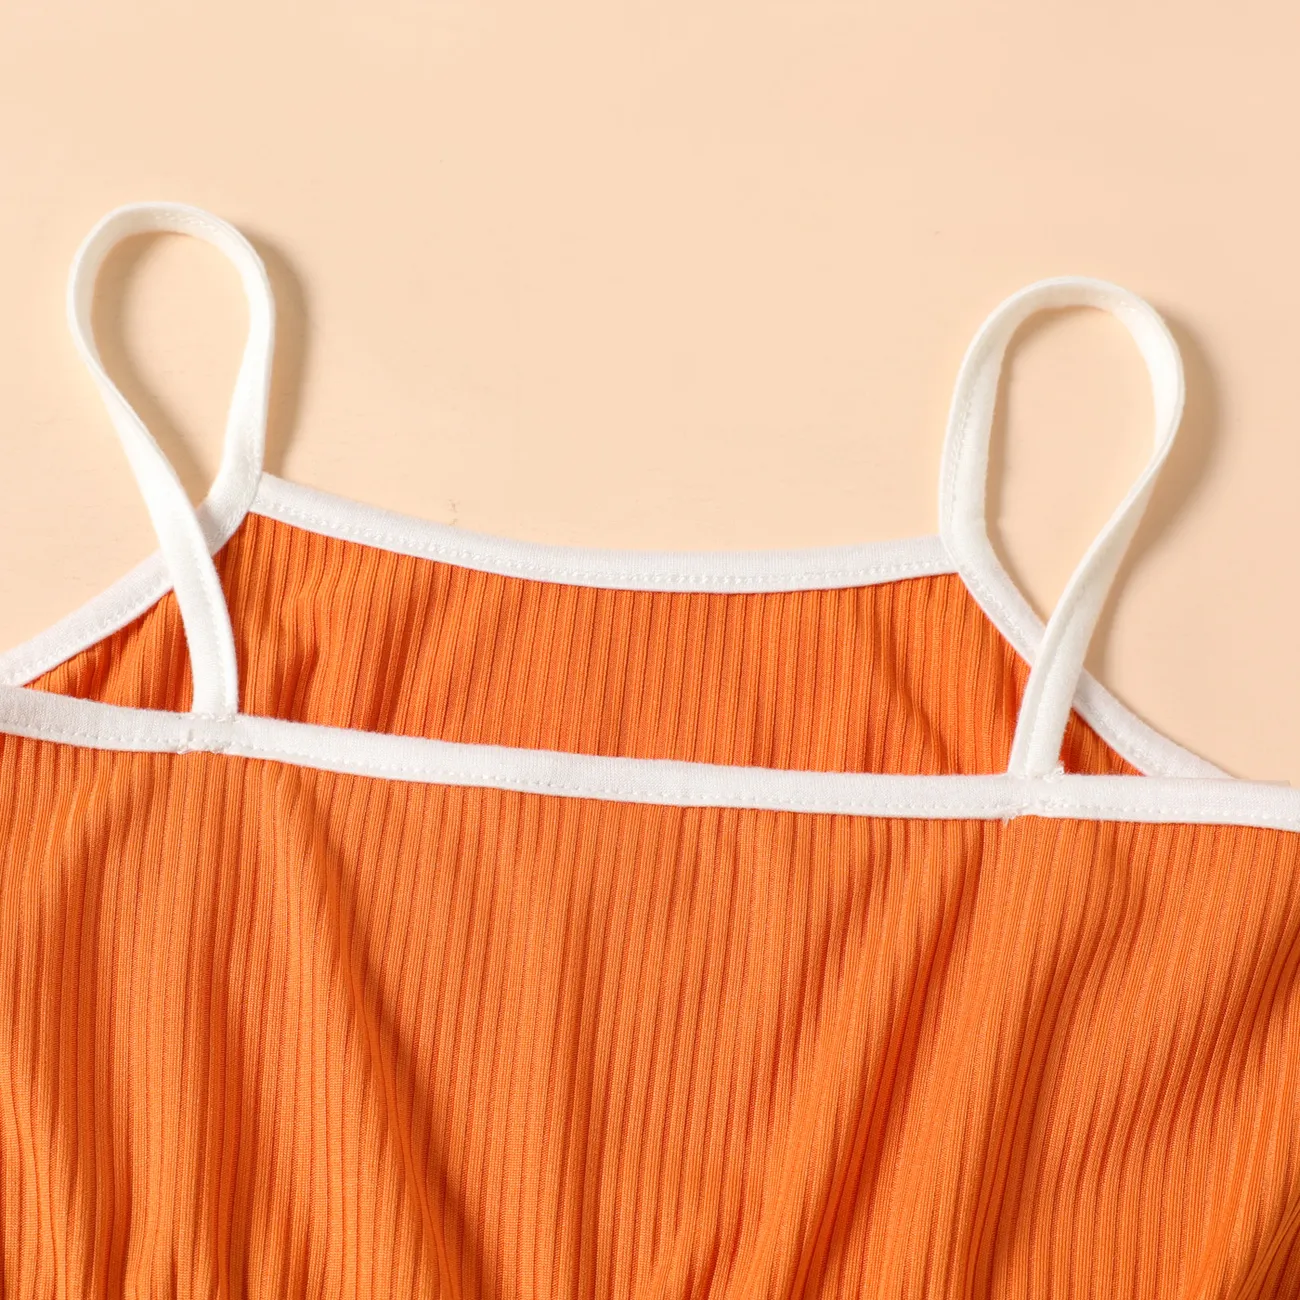 Toddler Girl Rainbow Print Bowknot Design Cami  Romper Jumpsuit Shorts Orange big image 1